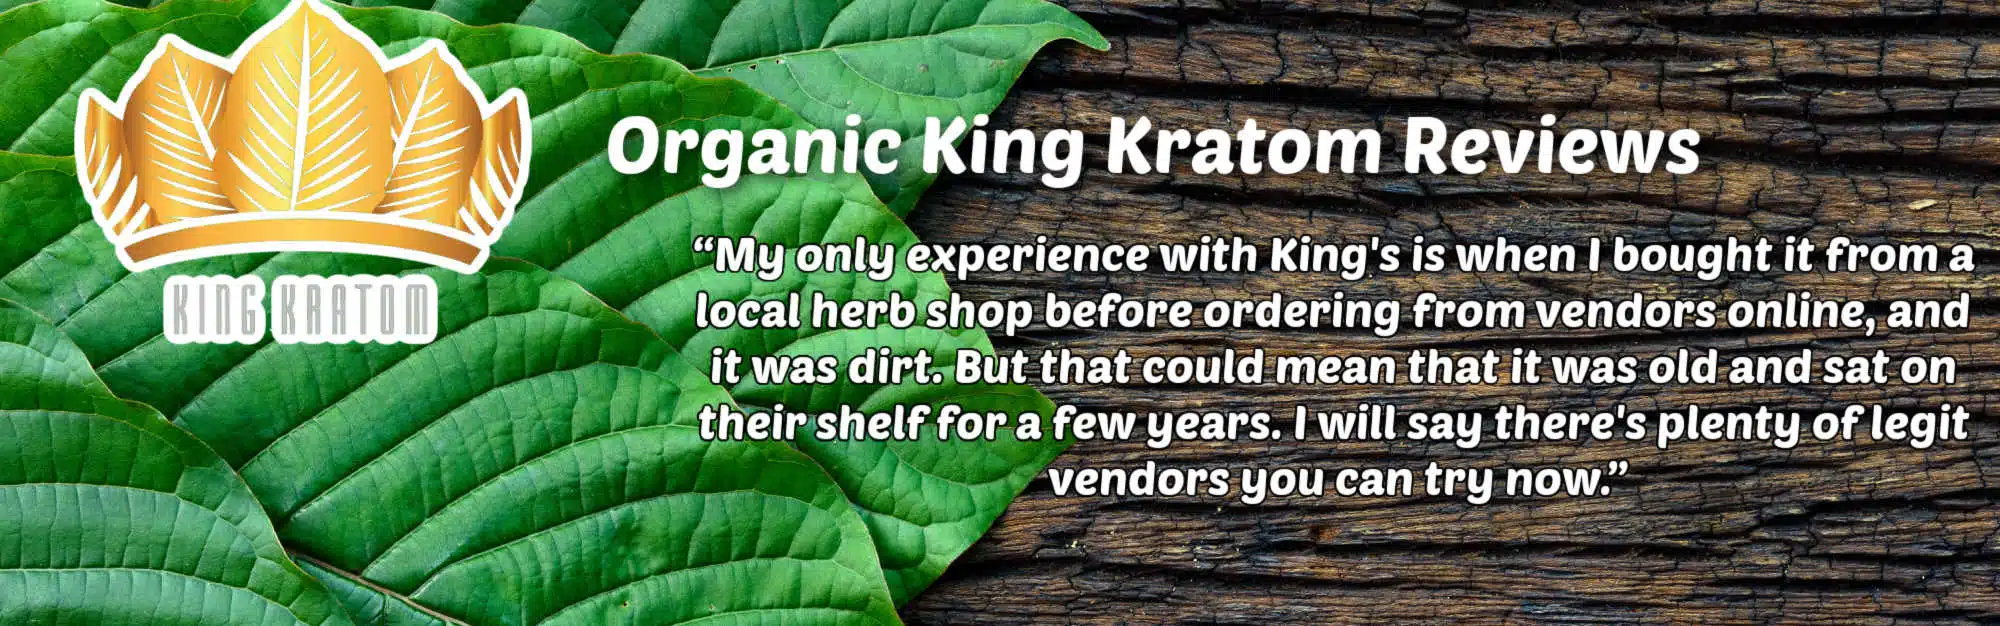 Organic King Kratom customer reviews banner and sample review